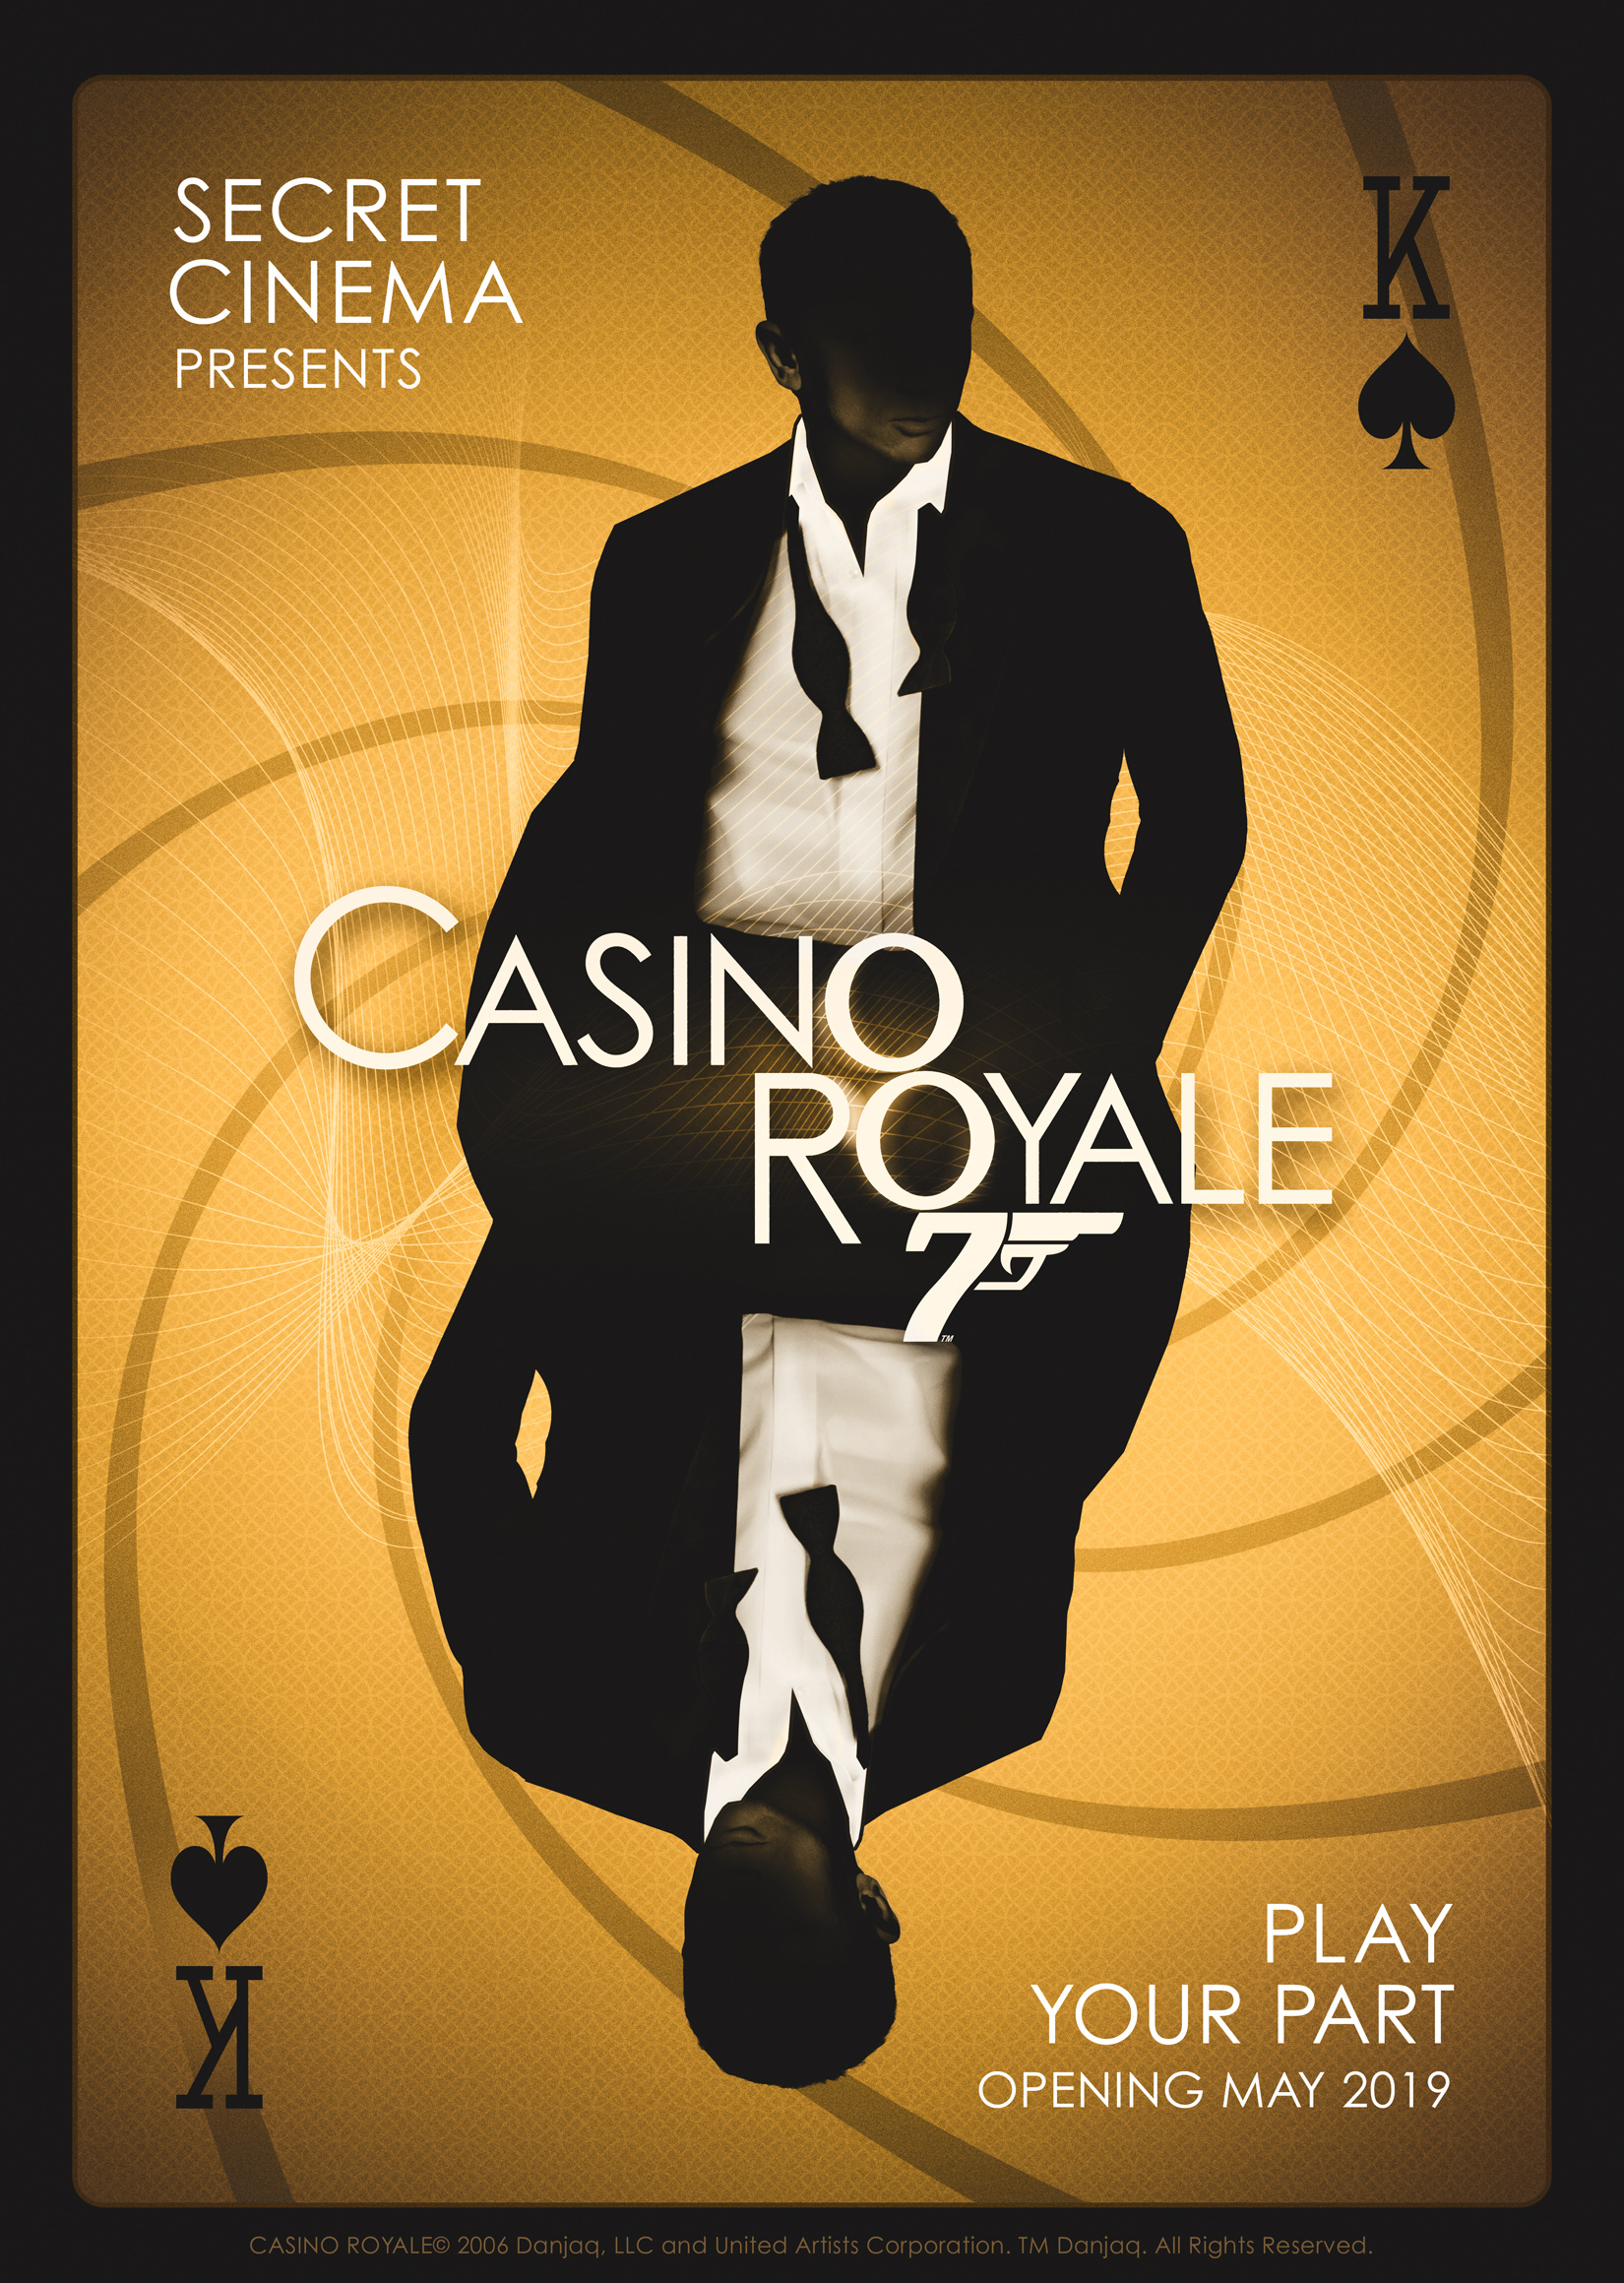 secret cinema casino royale wiki